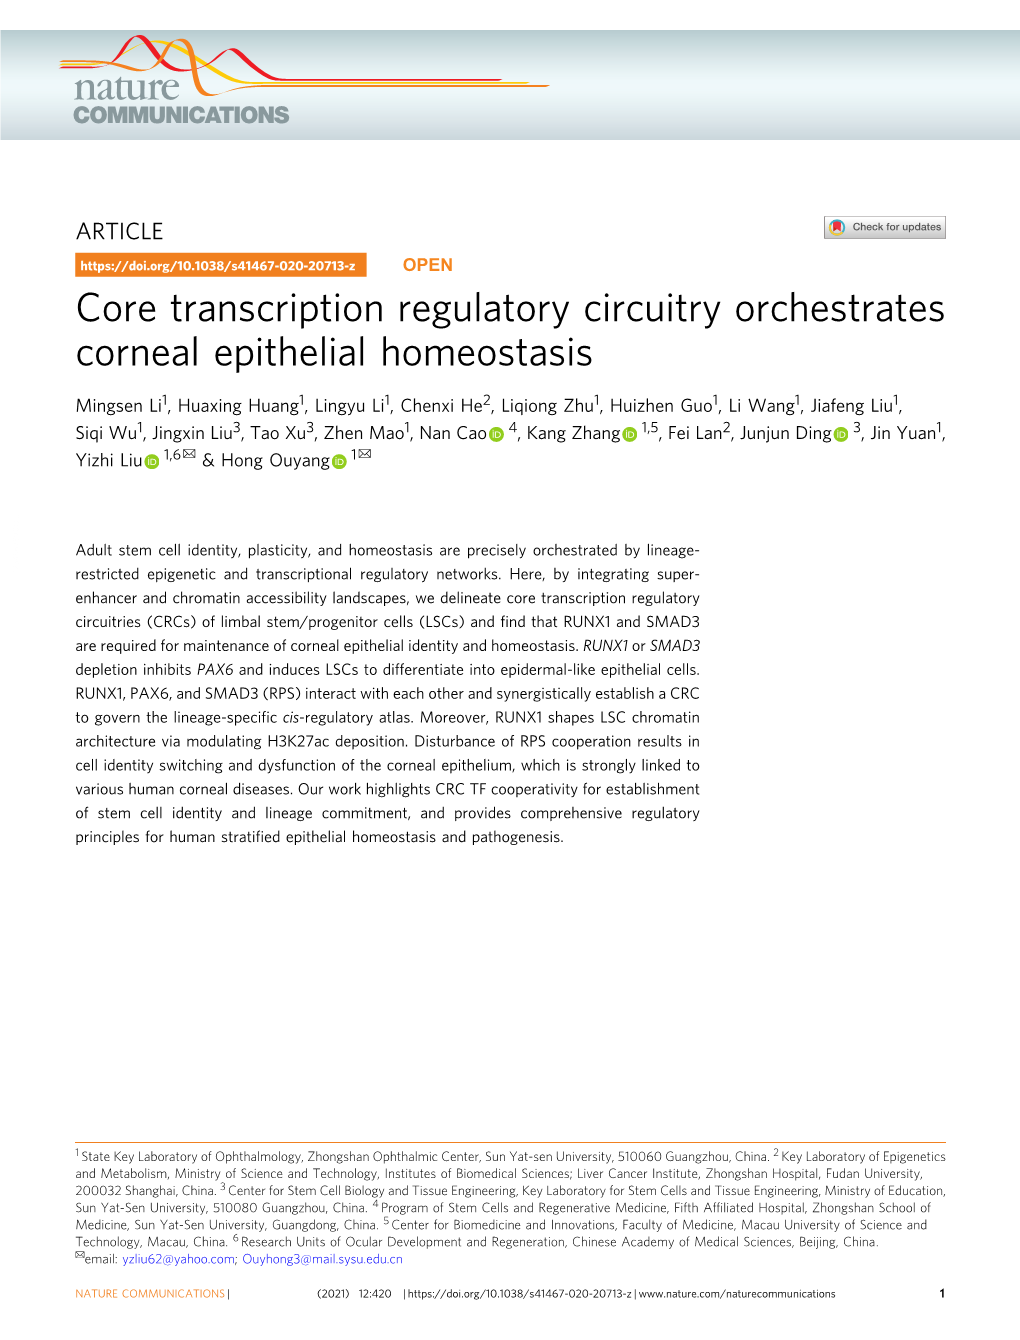 Core Transcription Regulatory Circuitry Orchestrates Corneal Epithelial Homeostasis